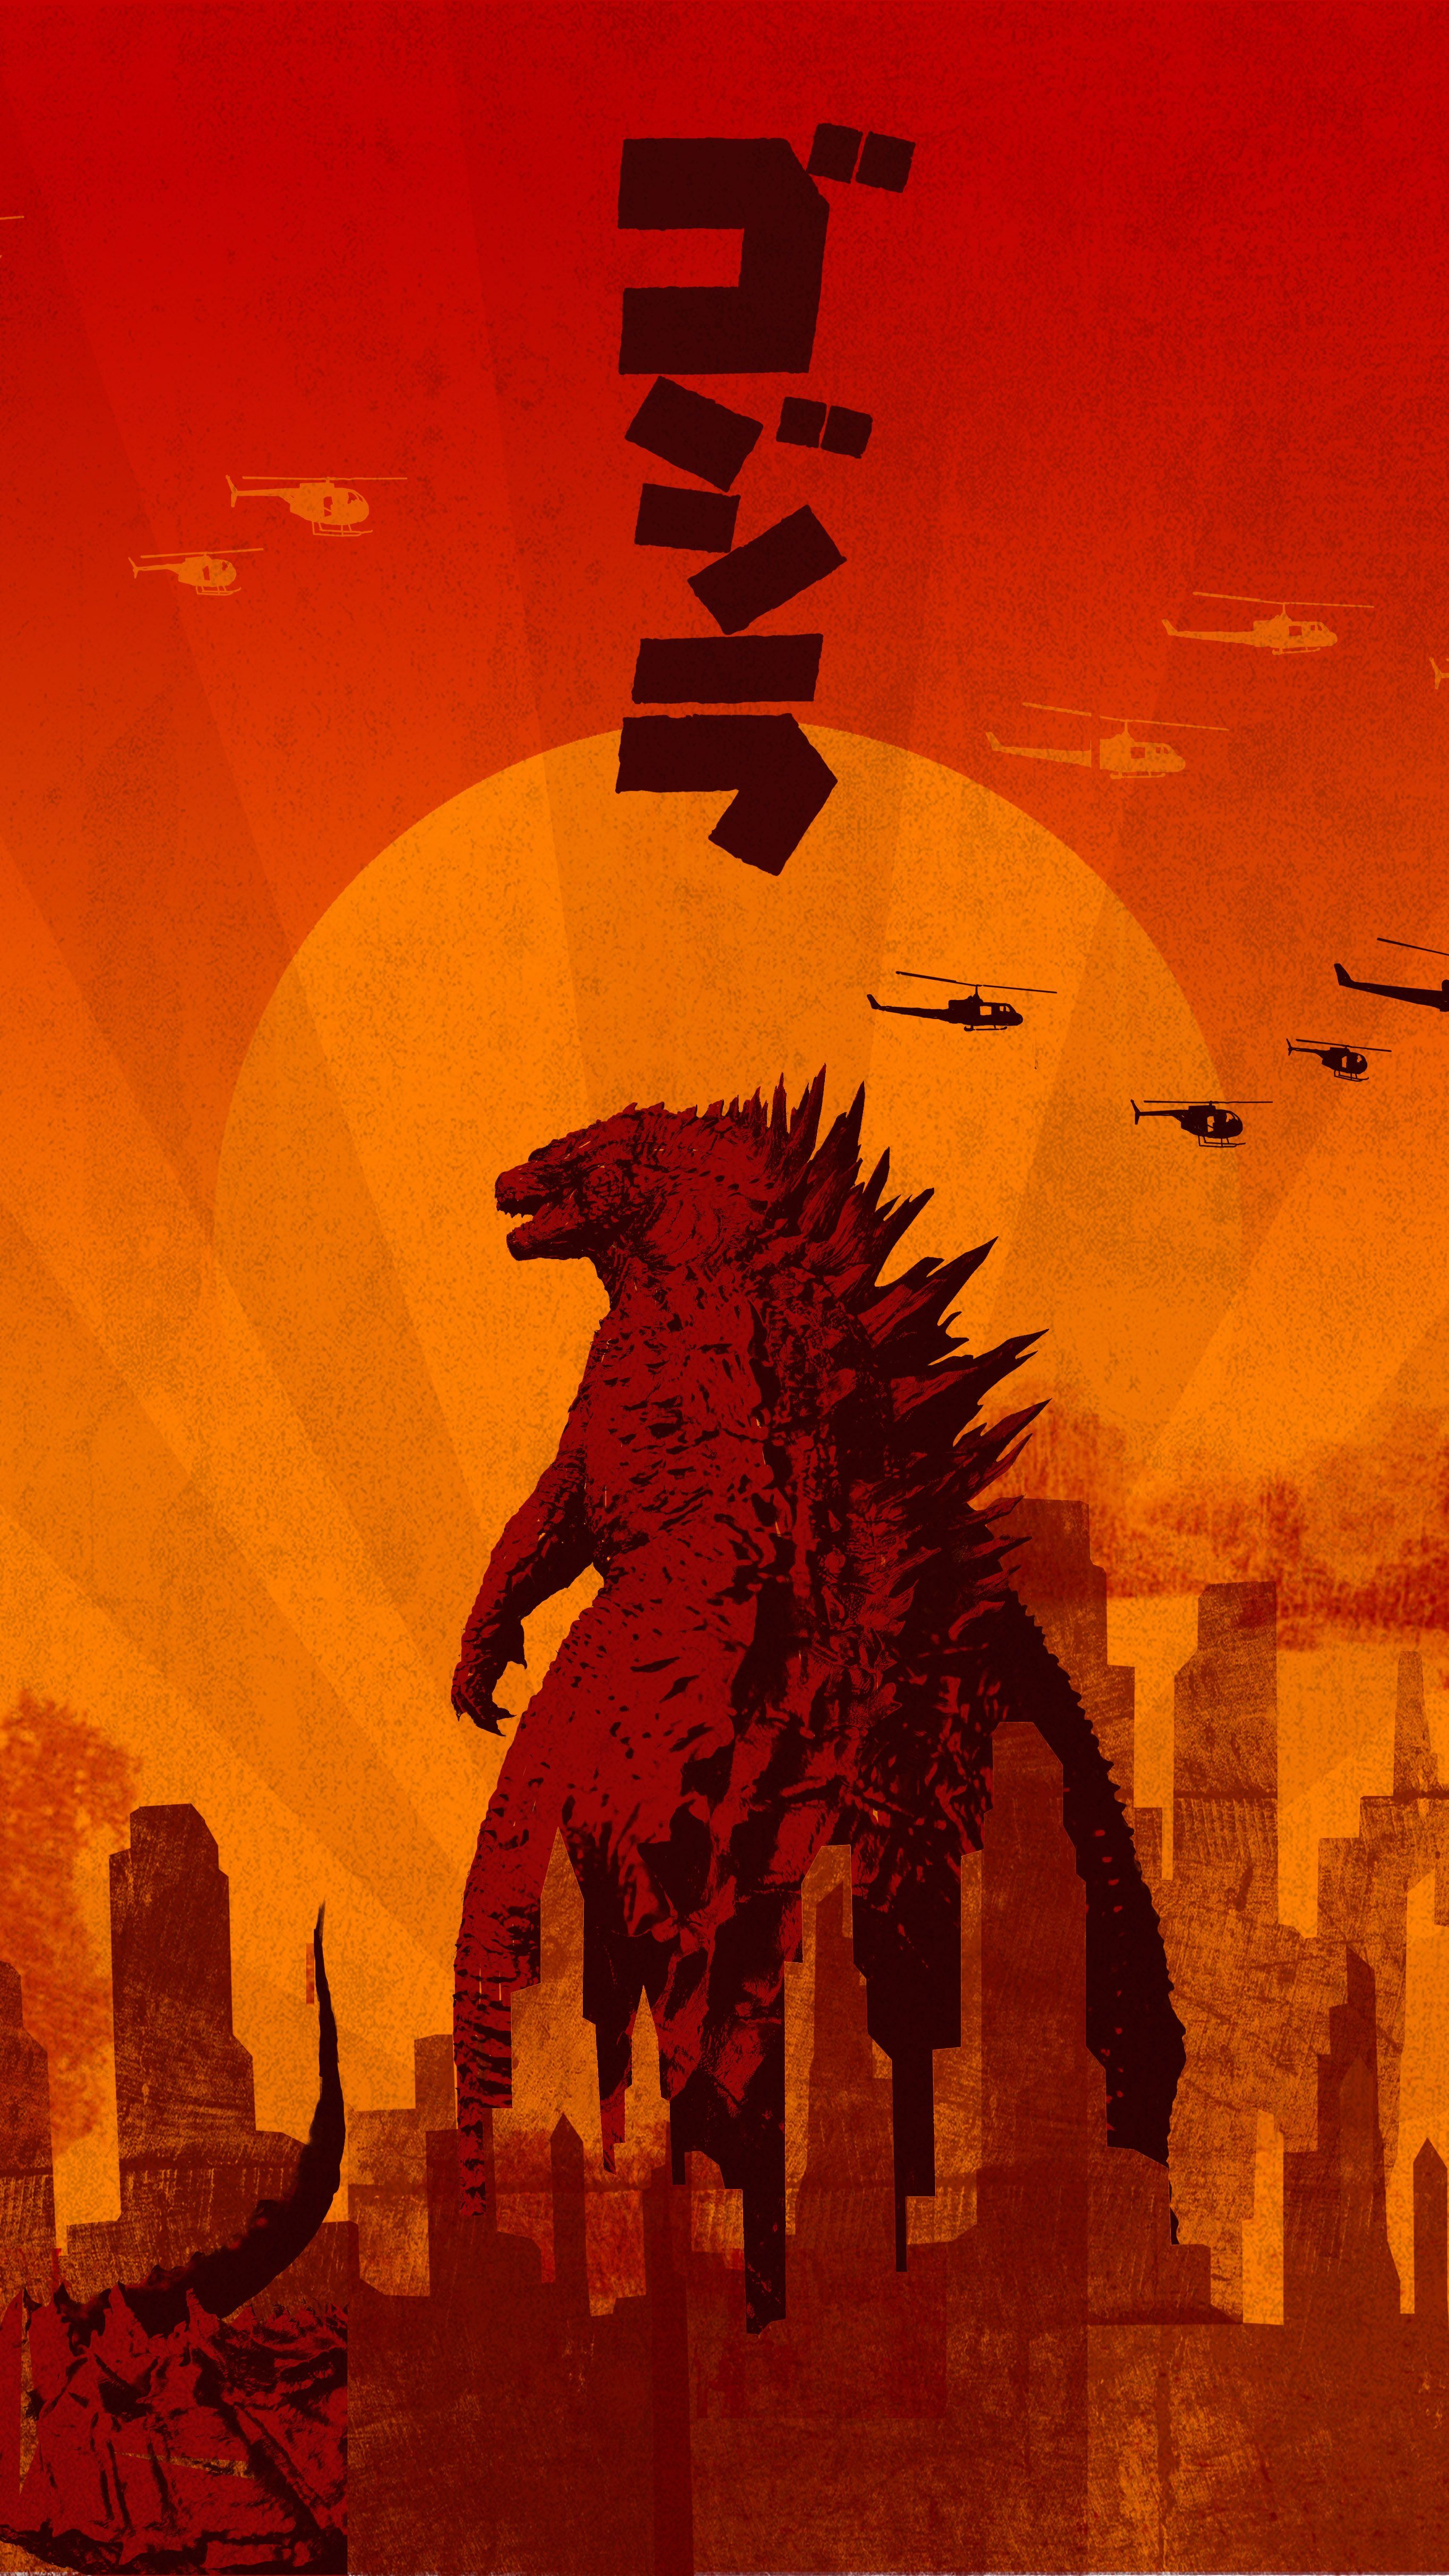 Godzilla Phone Wallpaper Free .wallpaperaccess.com